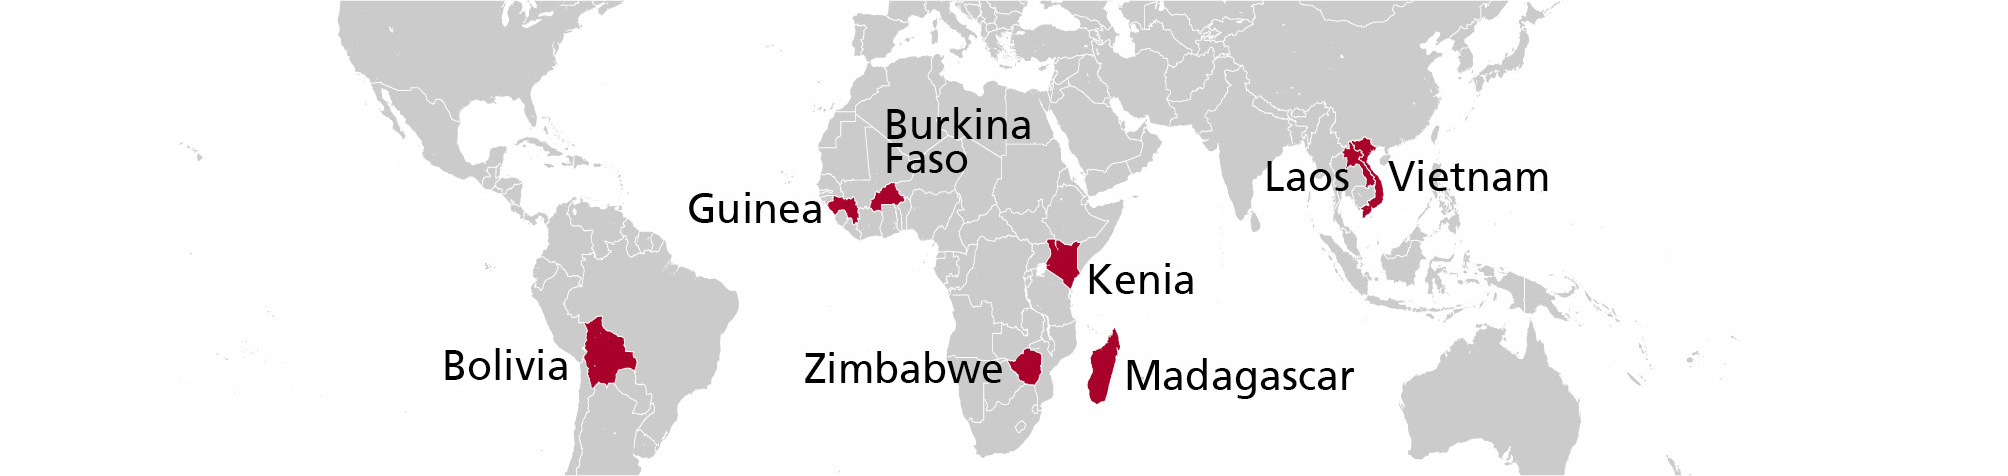 Dove la CBM fornisce cure oculistiche: Bolivia, Burkina Faso, Guinea, Kenya, Madagascar, Zimbabwe, Laos, Vietnam.